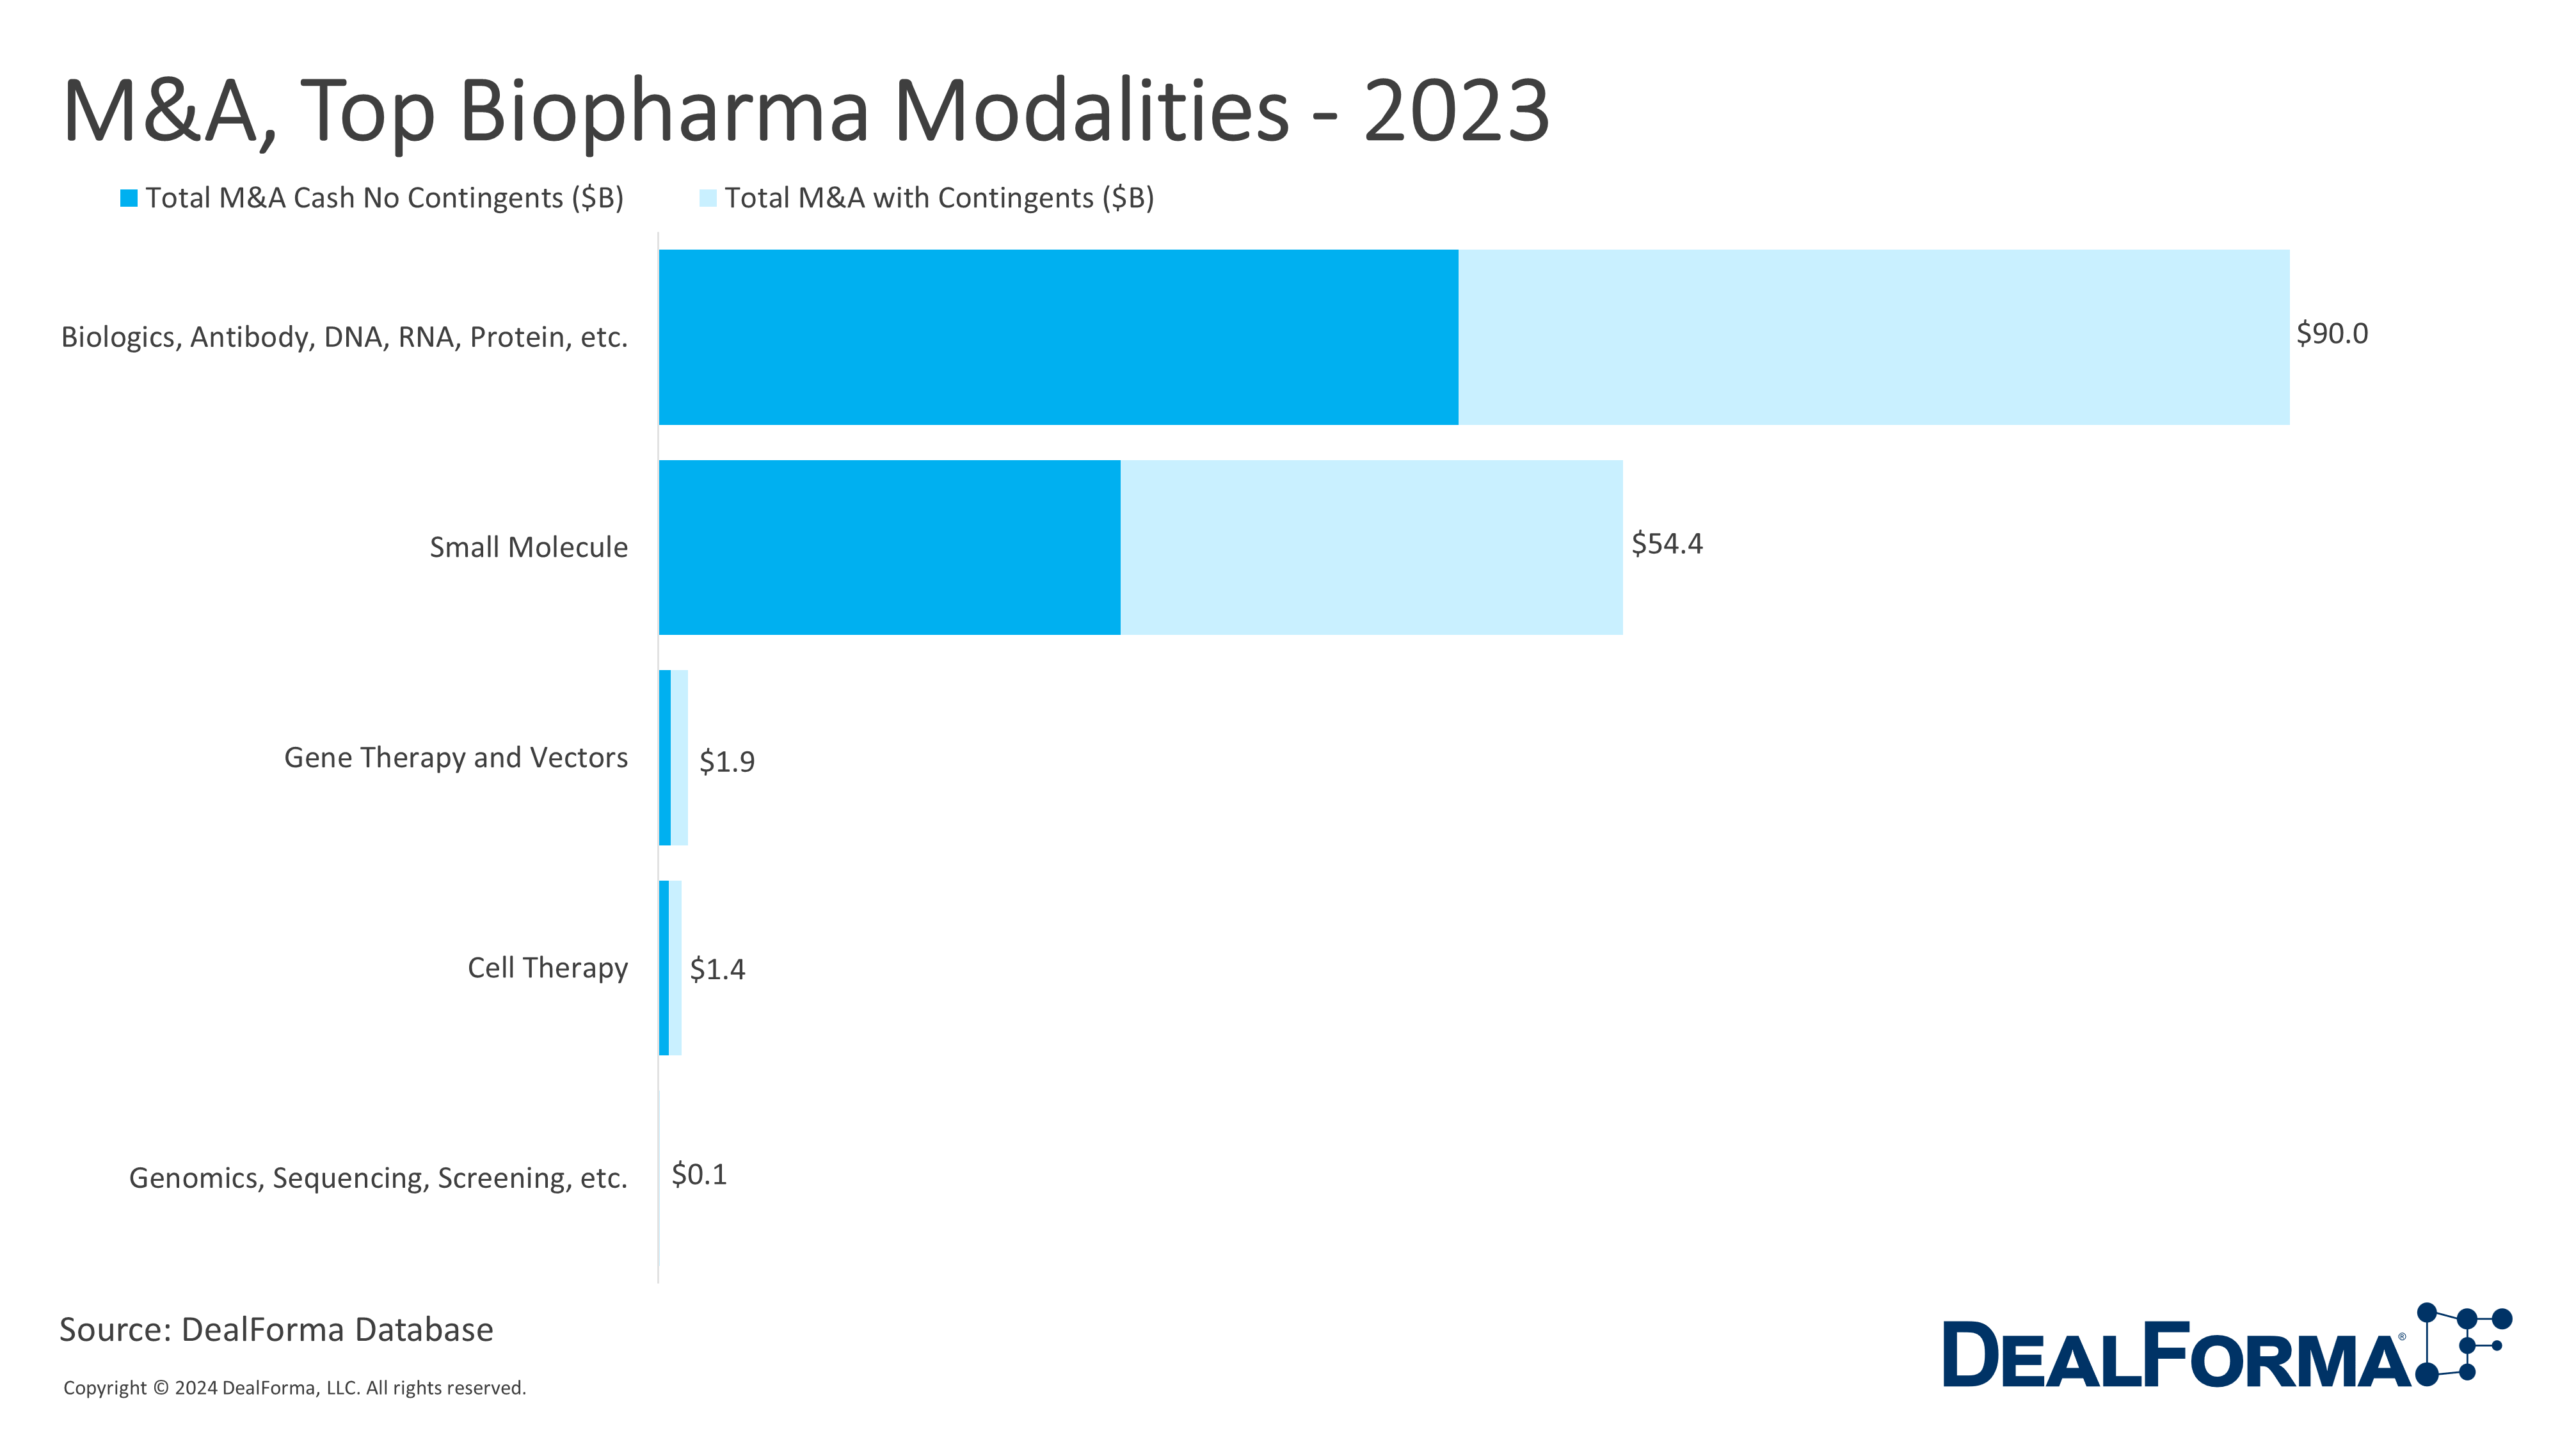 M&A, Top Biopharma Modalities - 2023